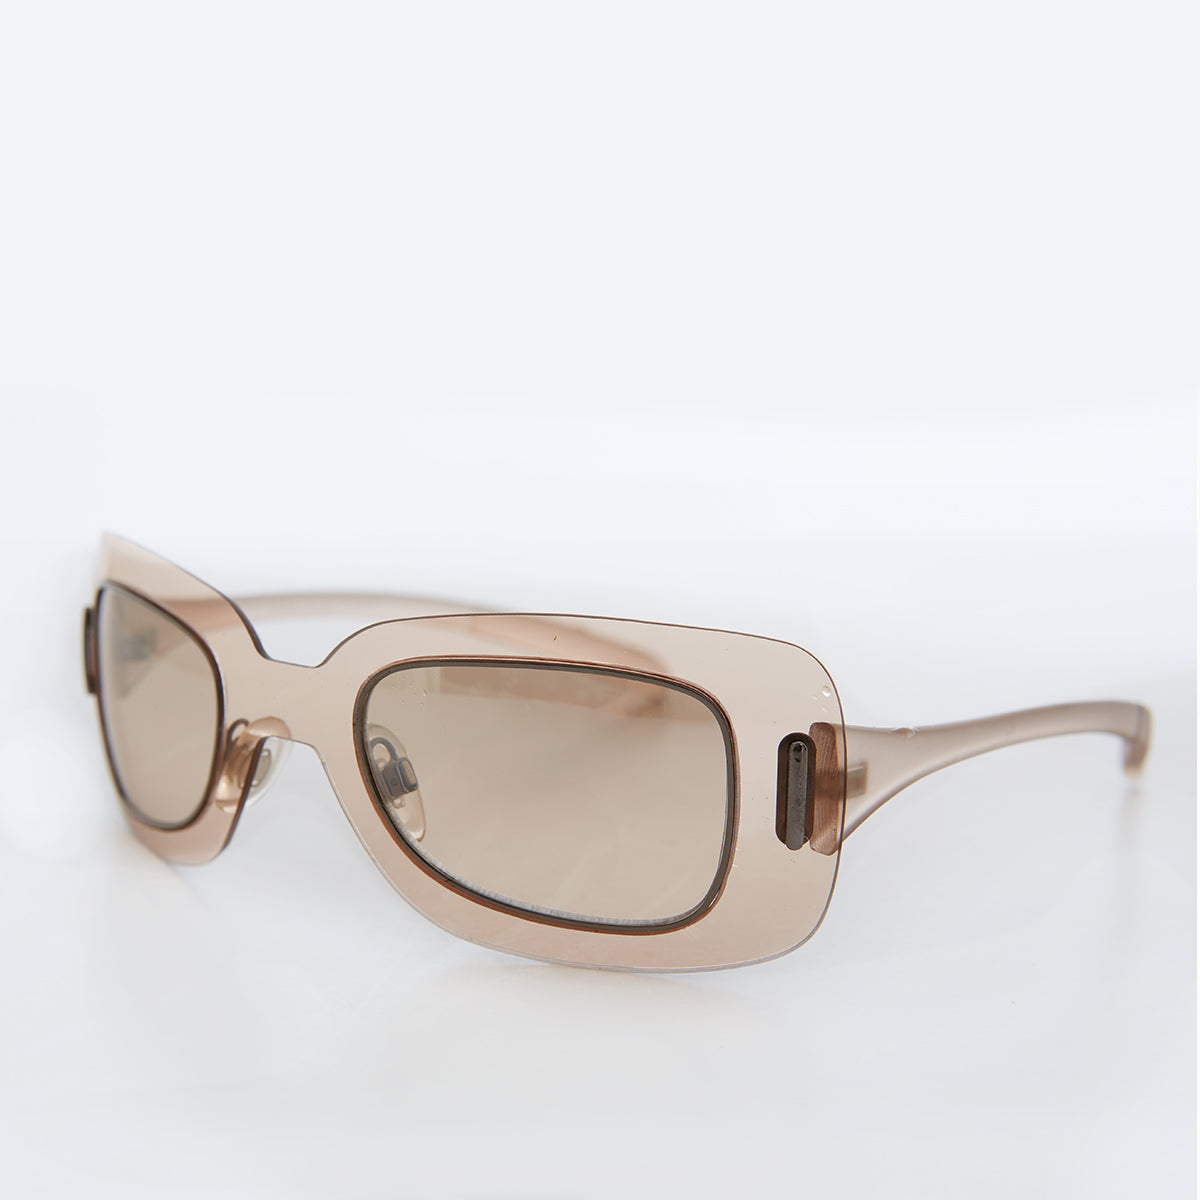 Curved Futuristic Vintage Sunglasses with Mirror Lens - Tonya